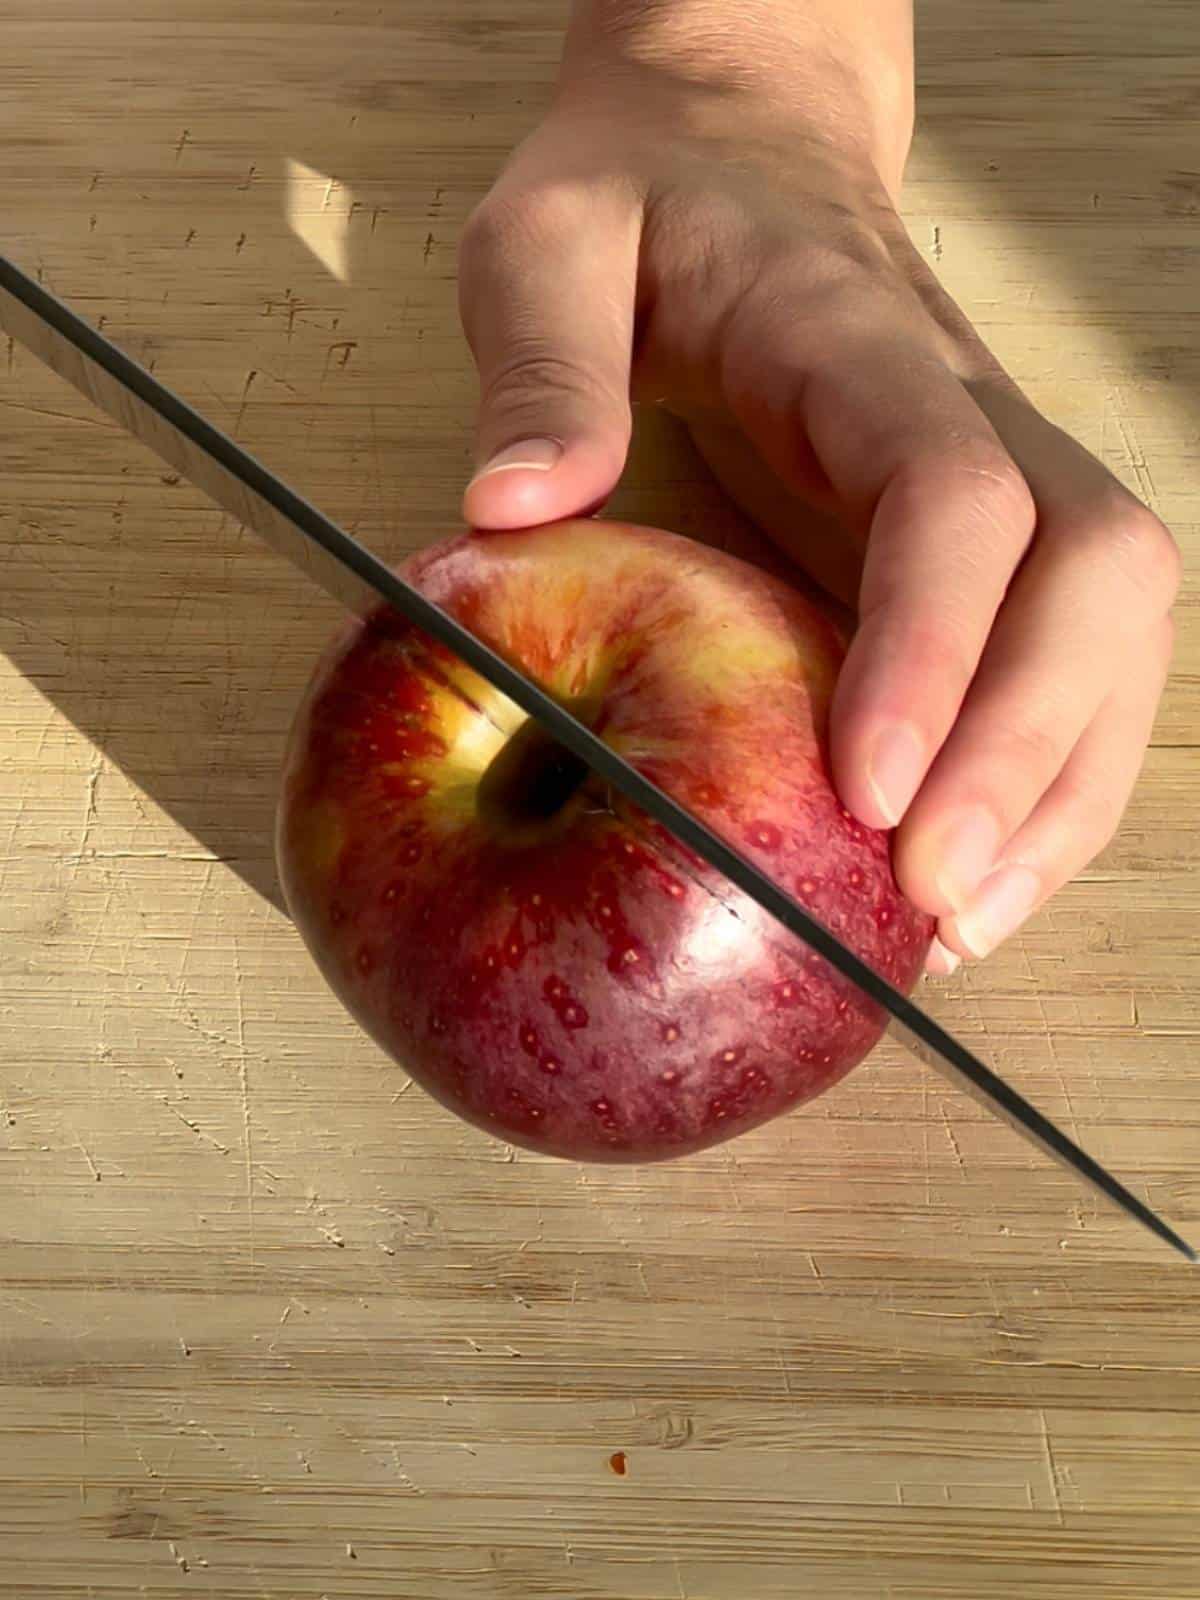 Cutting an apple in half.